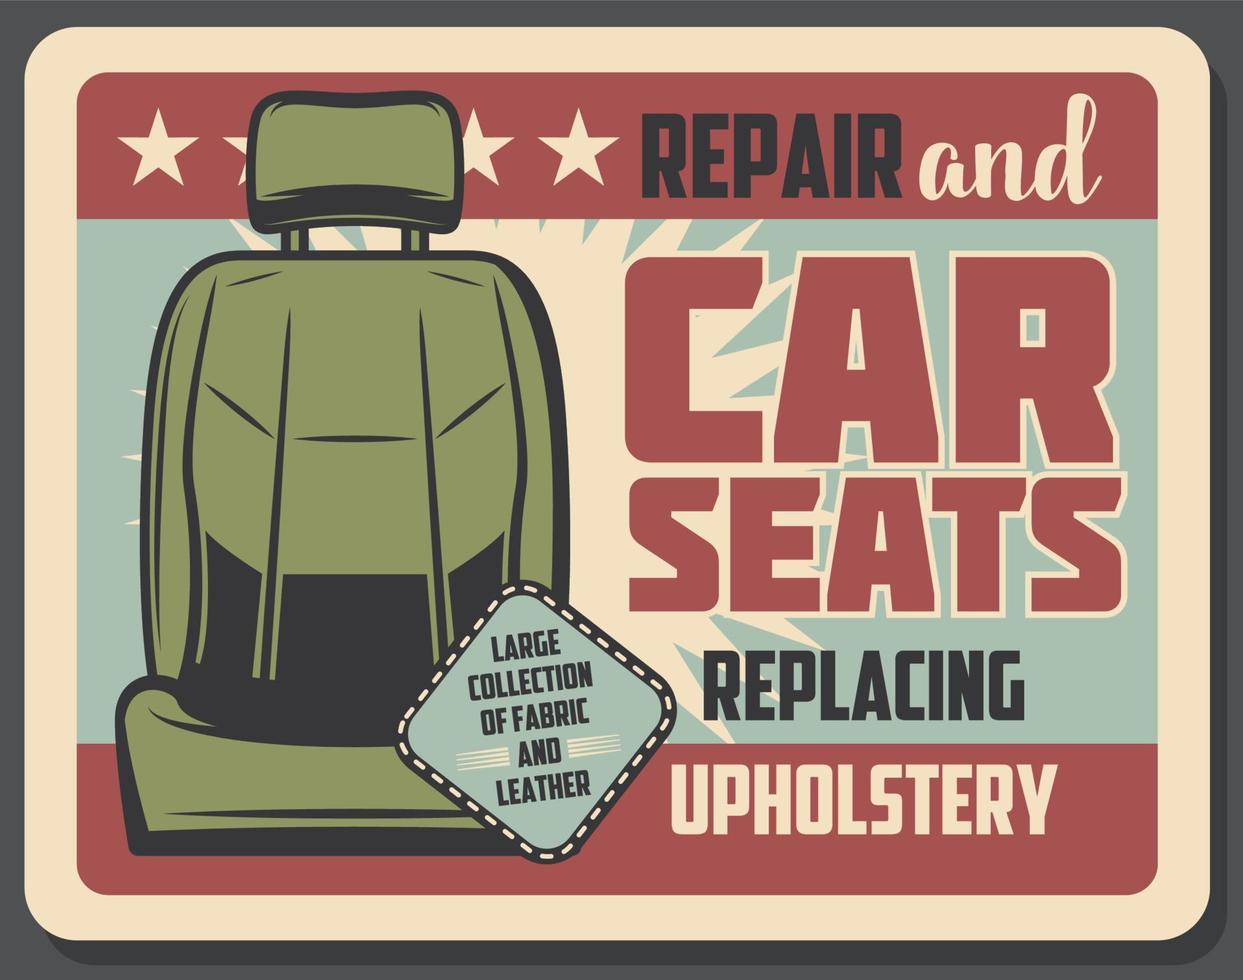 Car seat repair service retro grunge banner design vector